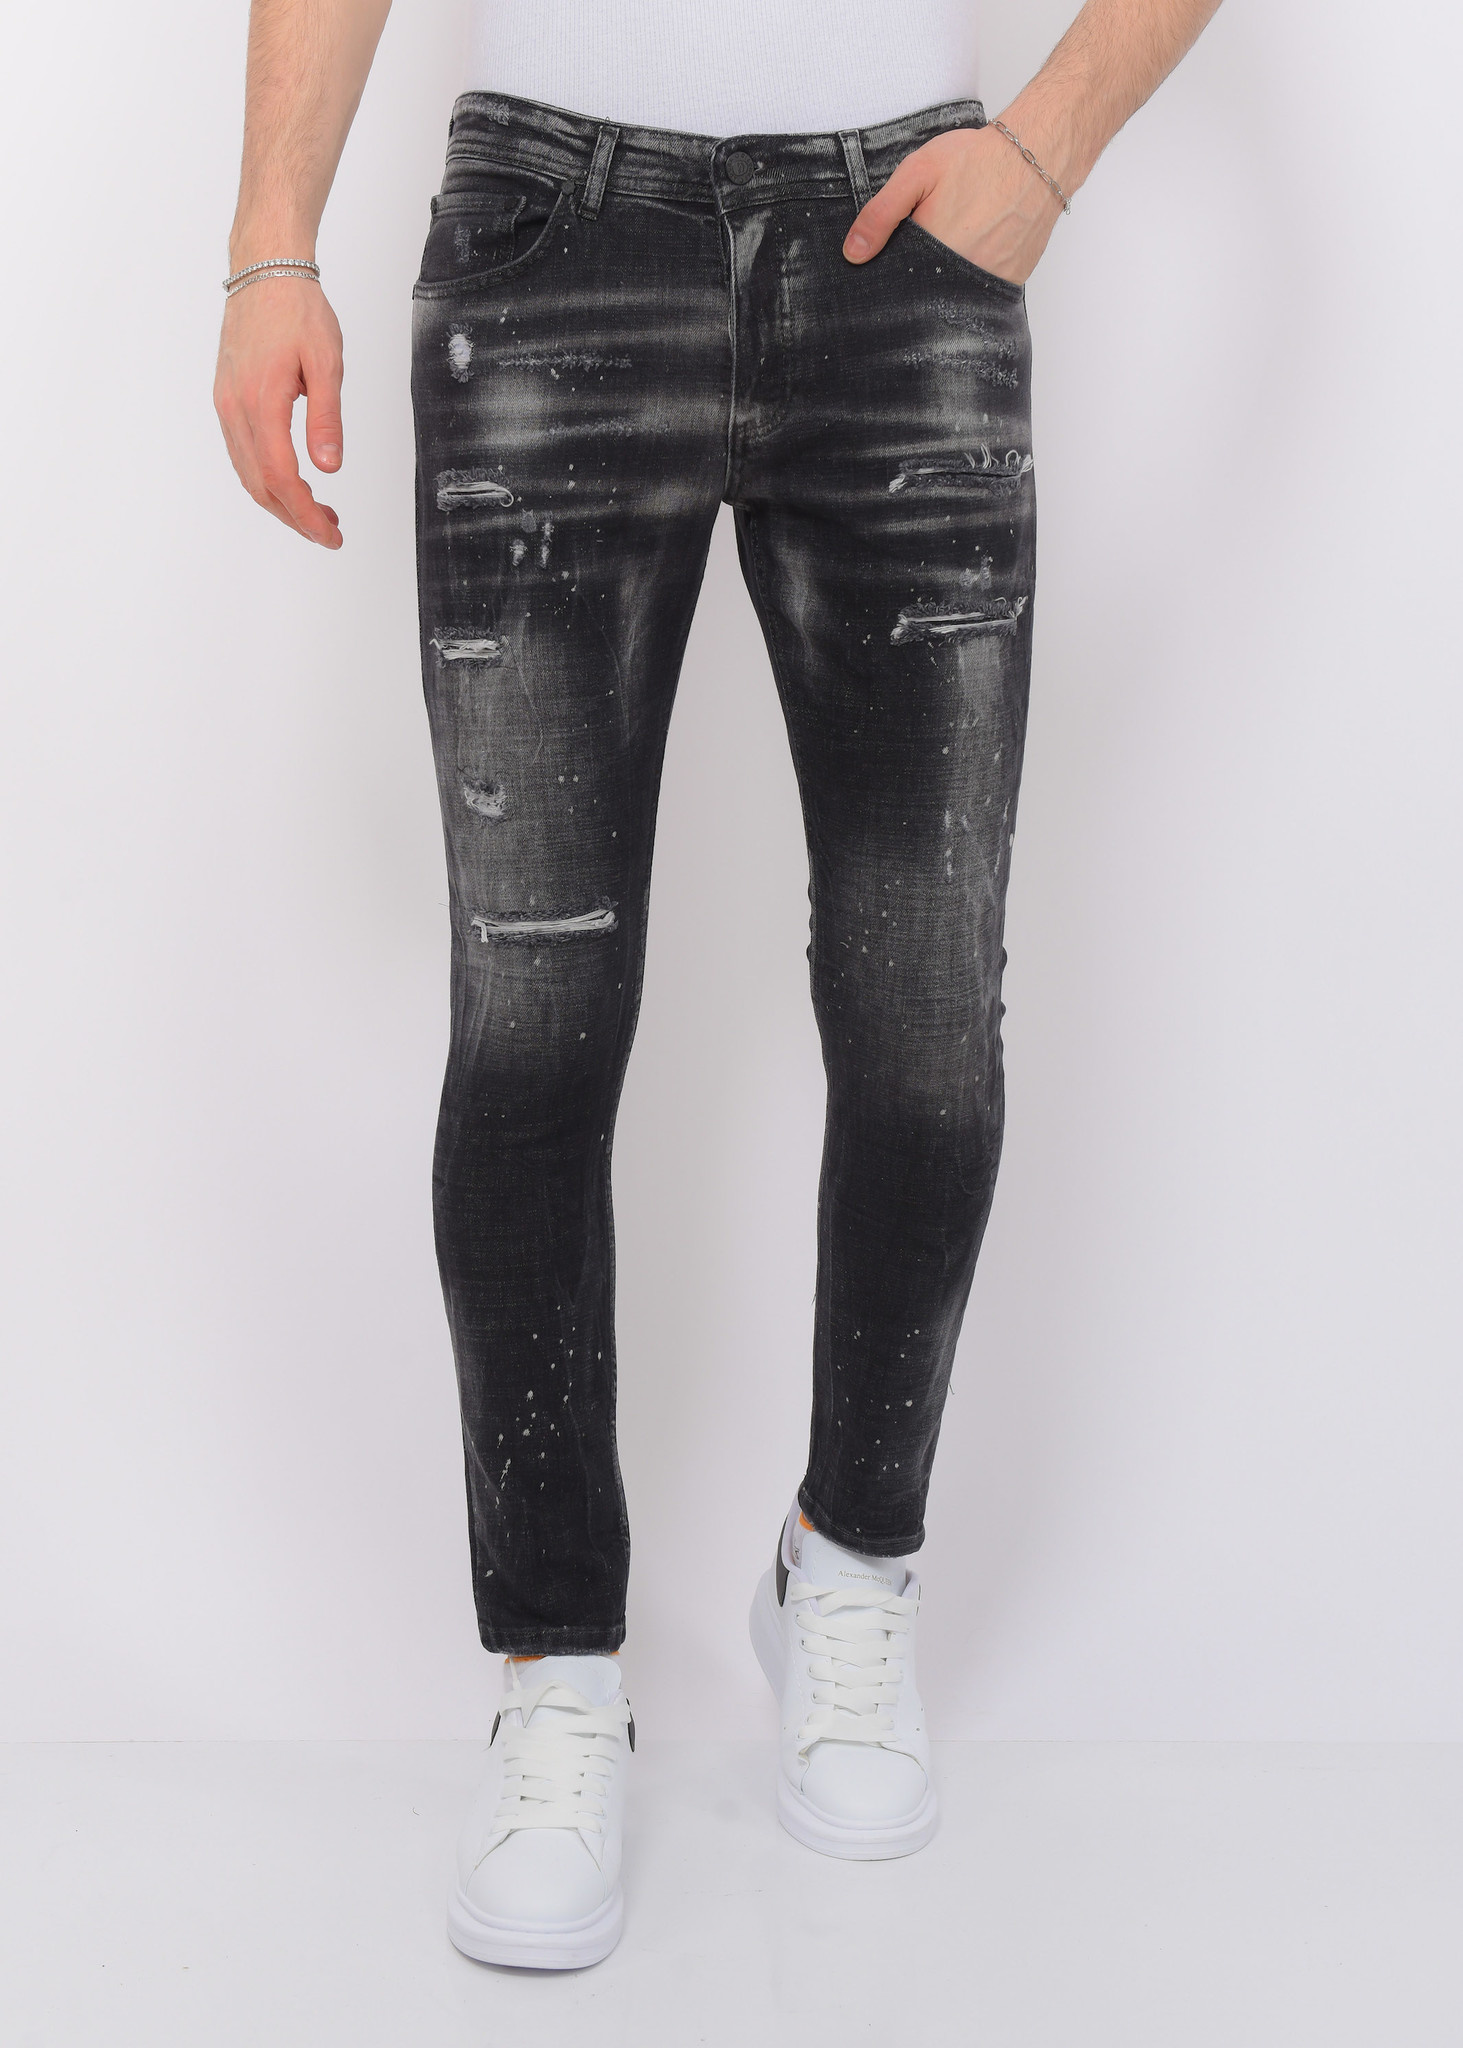 Splatter Painted Jeans: Mens Painted Jeans